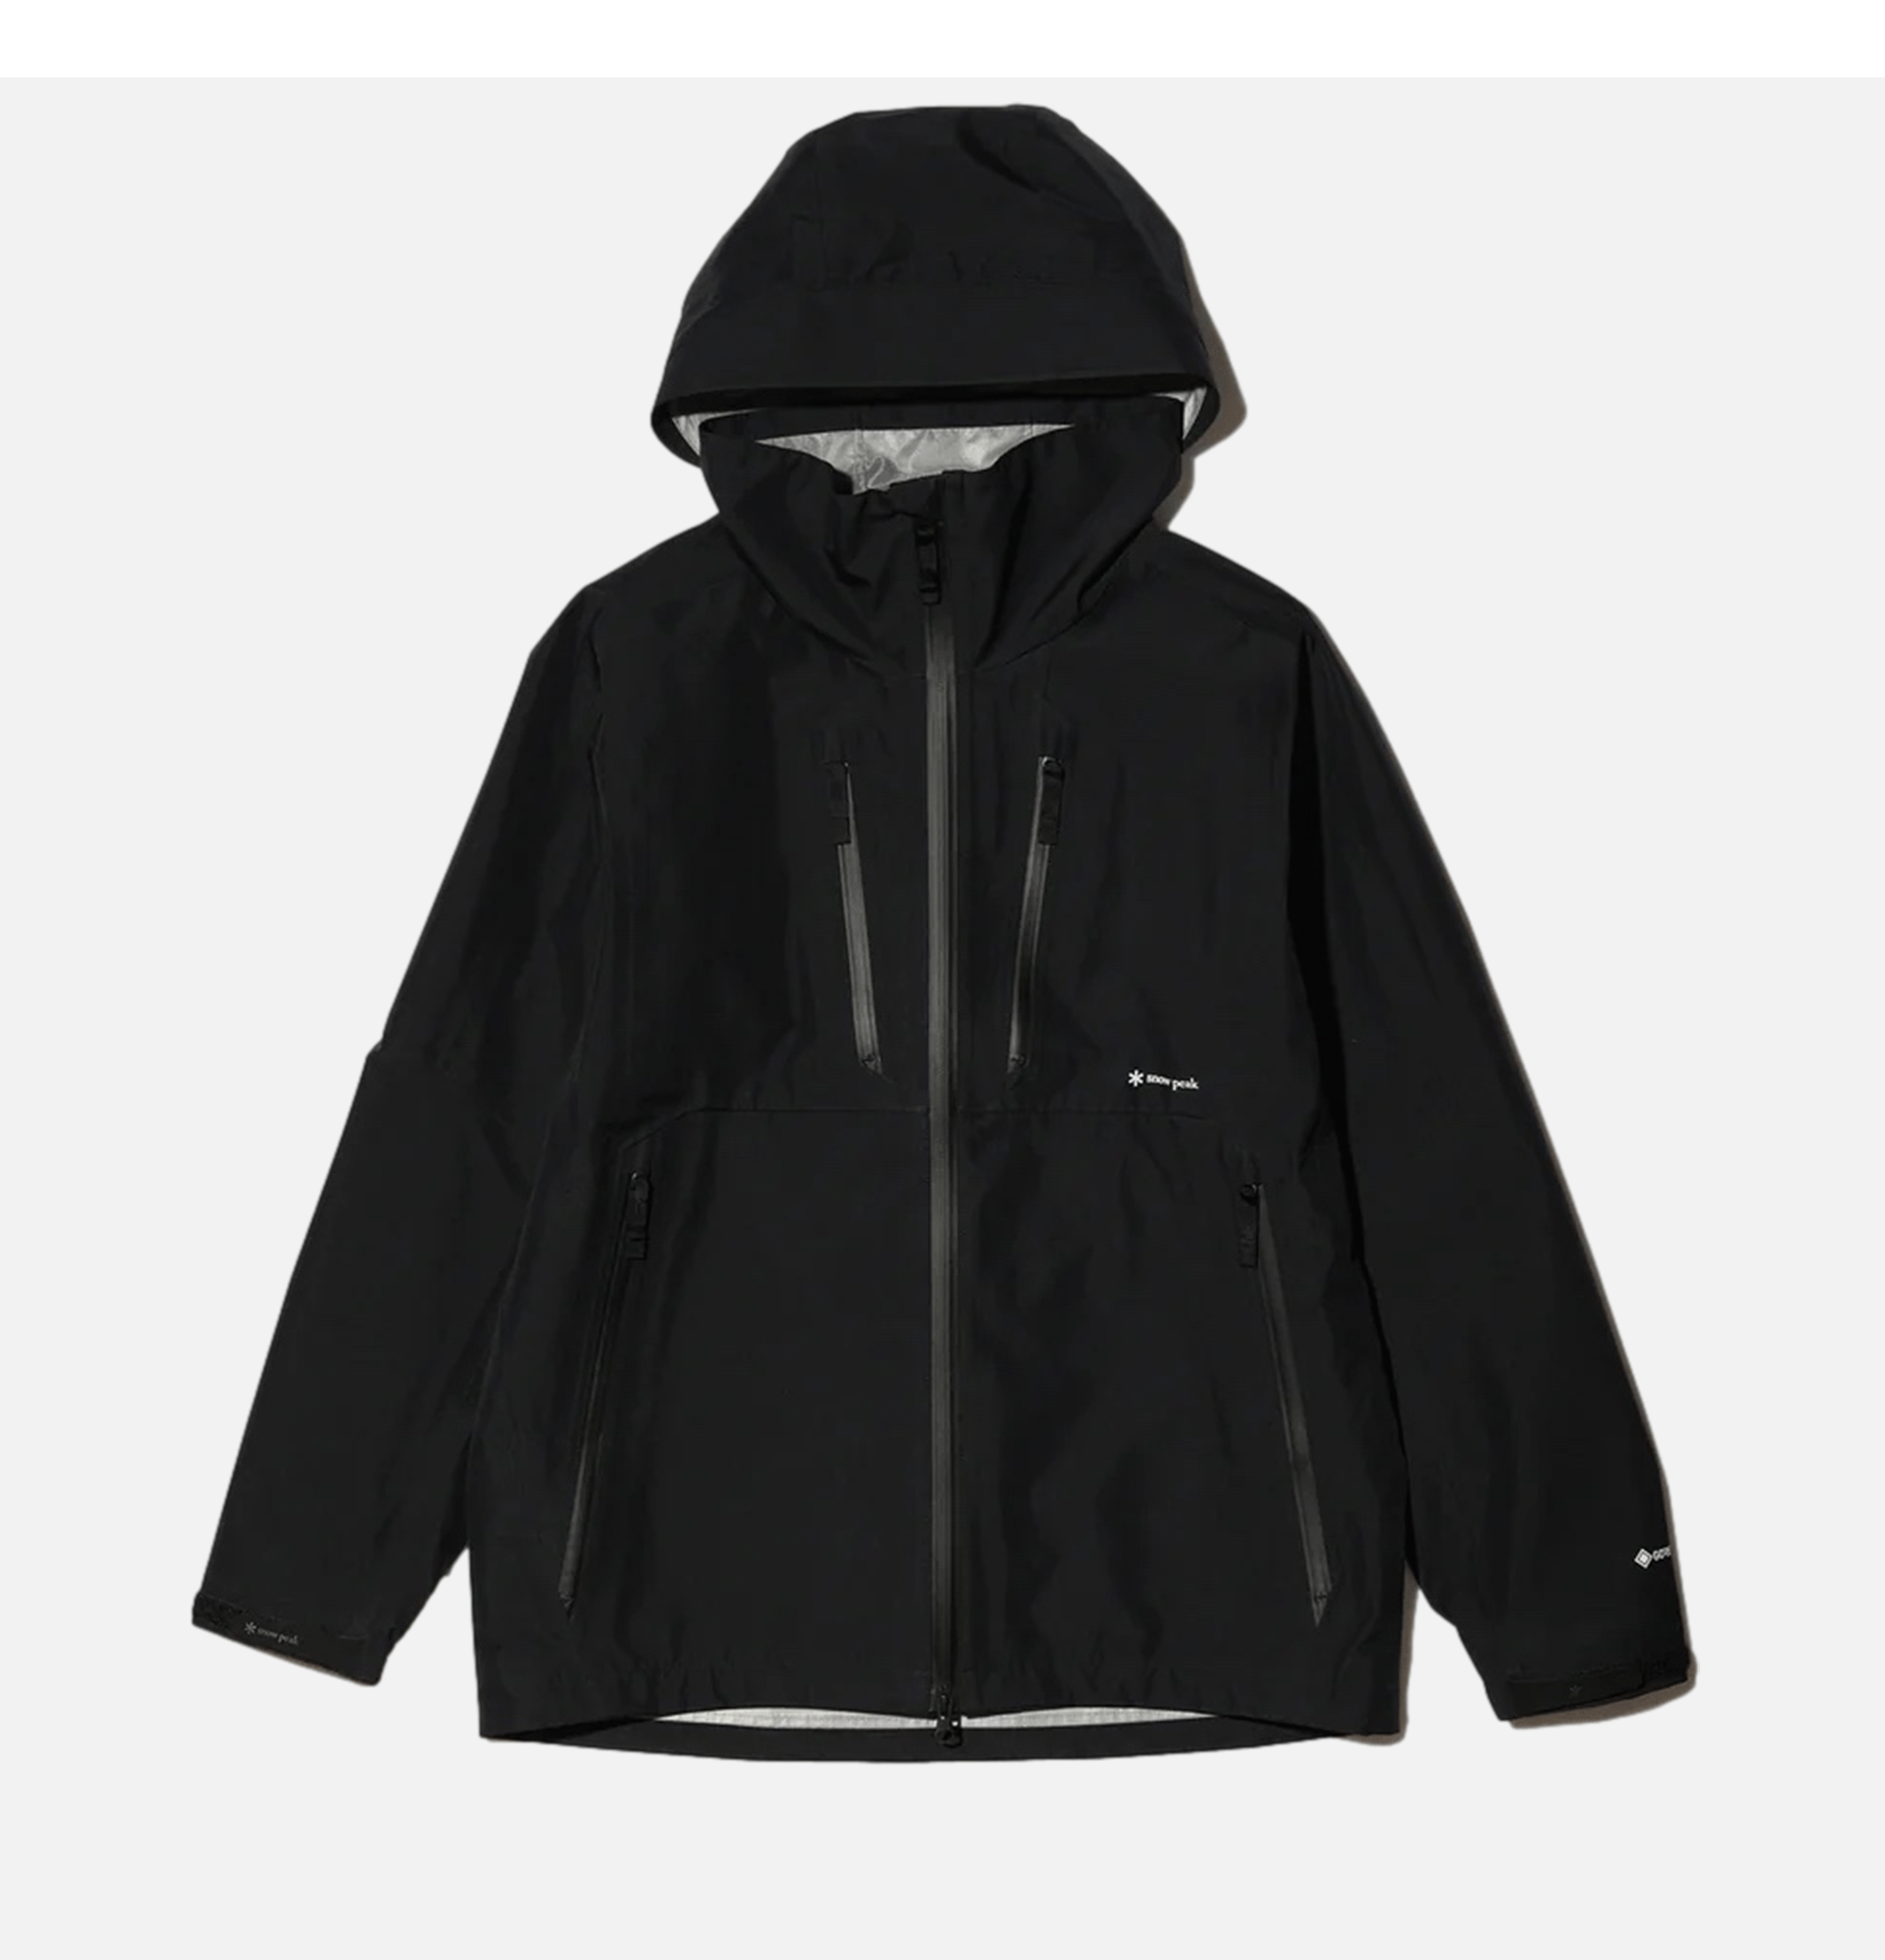 GORE-TEX Snow Peak Black rain jacket